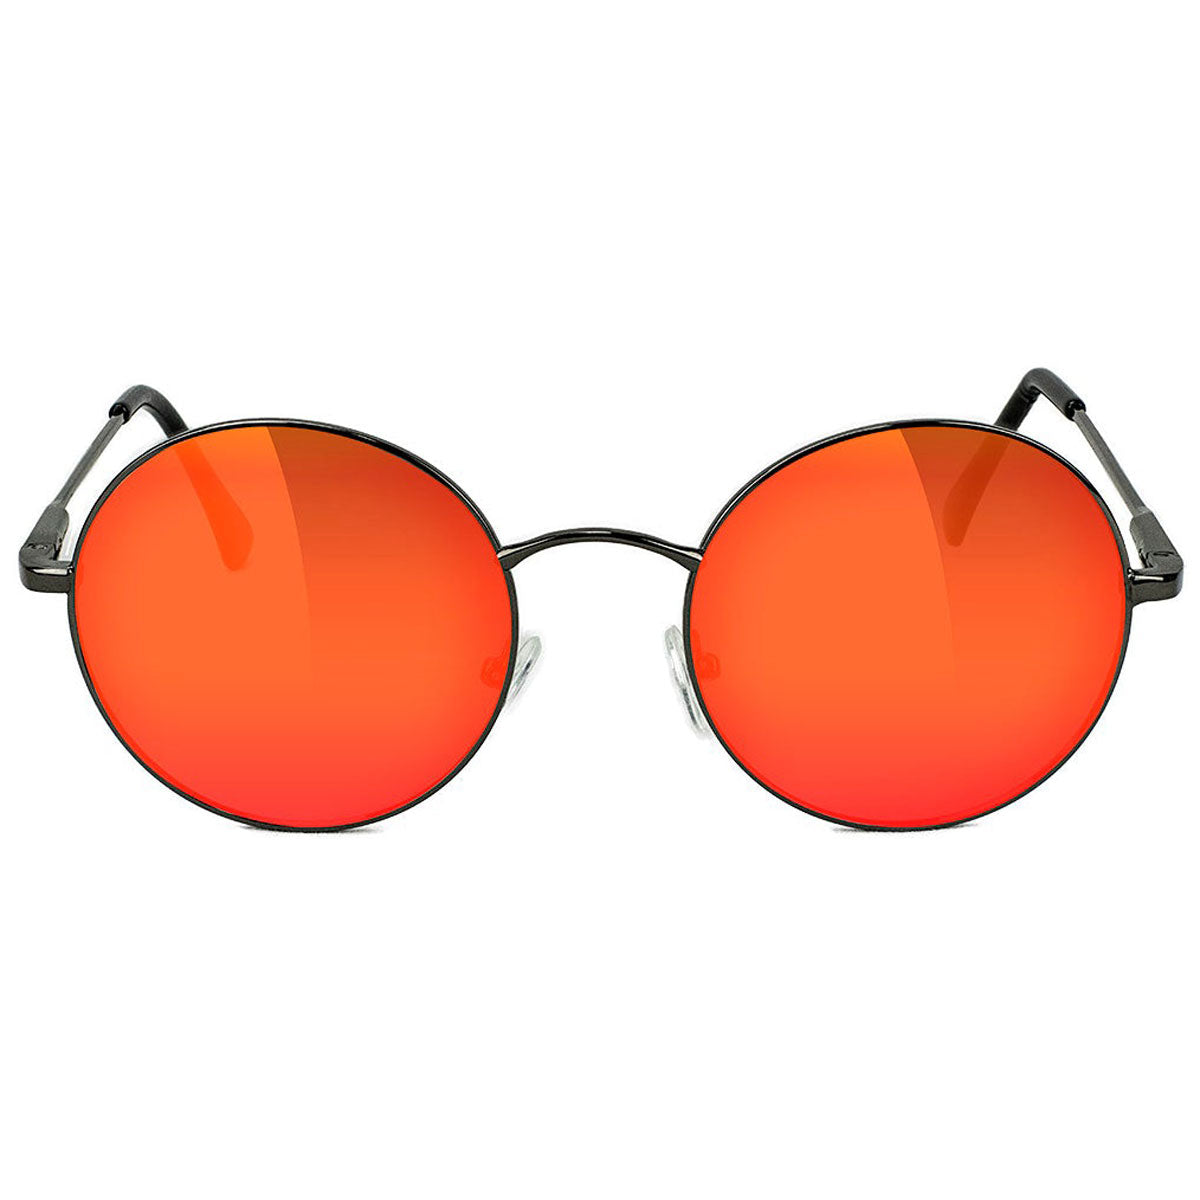 Glassy Mayfair Premium Polarized Sunglasses - Red Mirror image 2